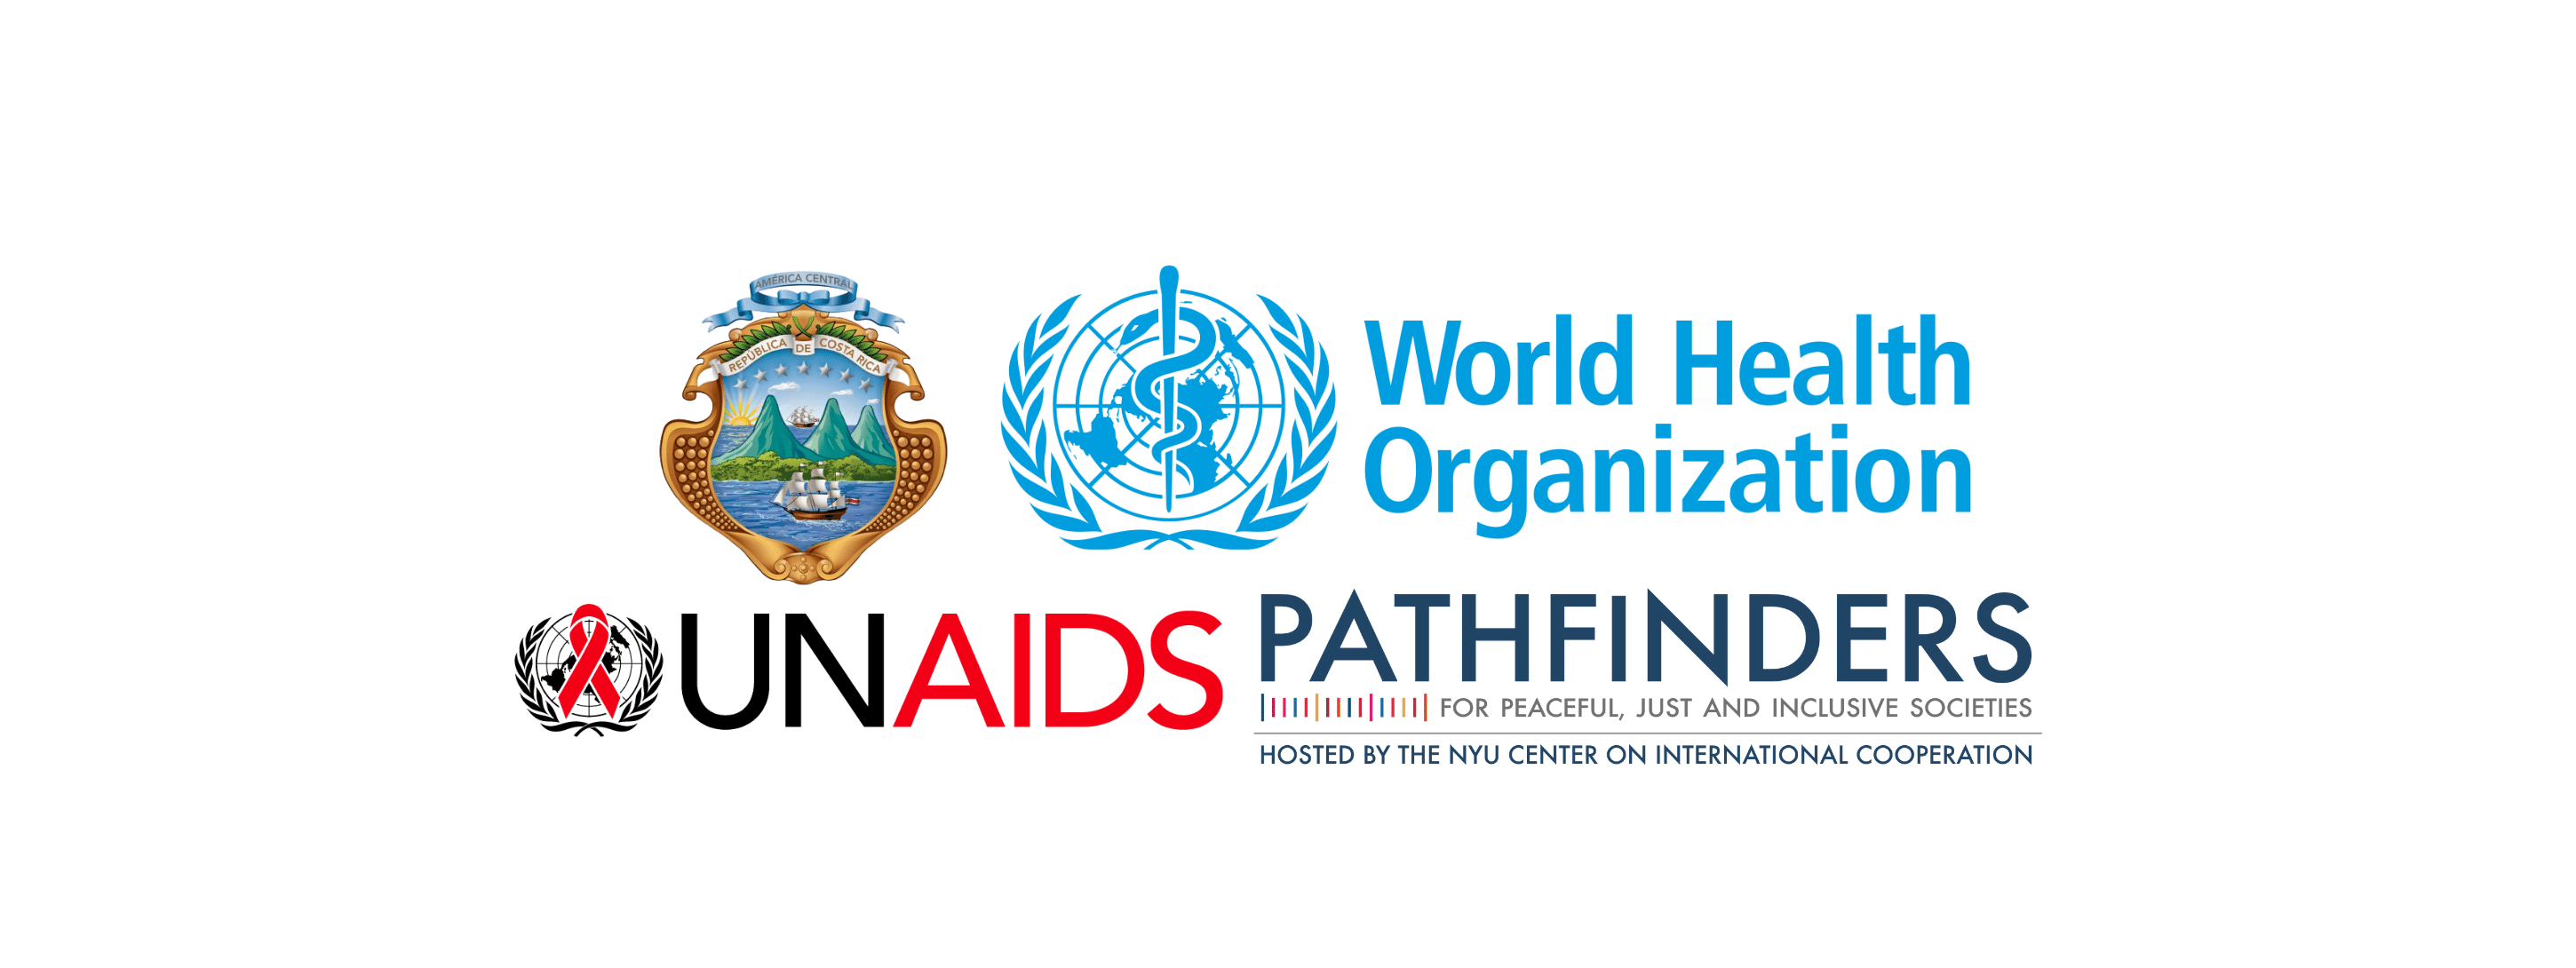 UNAIDS, WHO and Pathfinders Logos